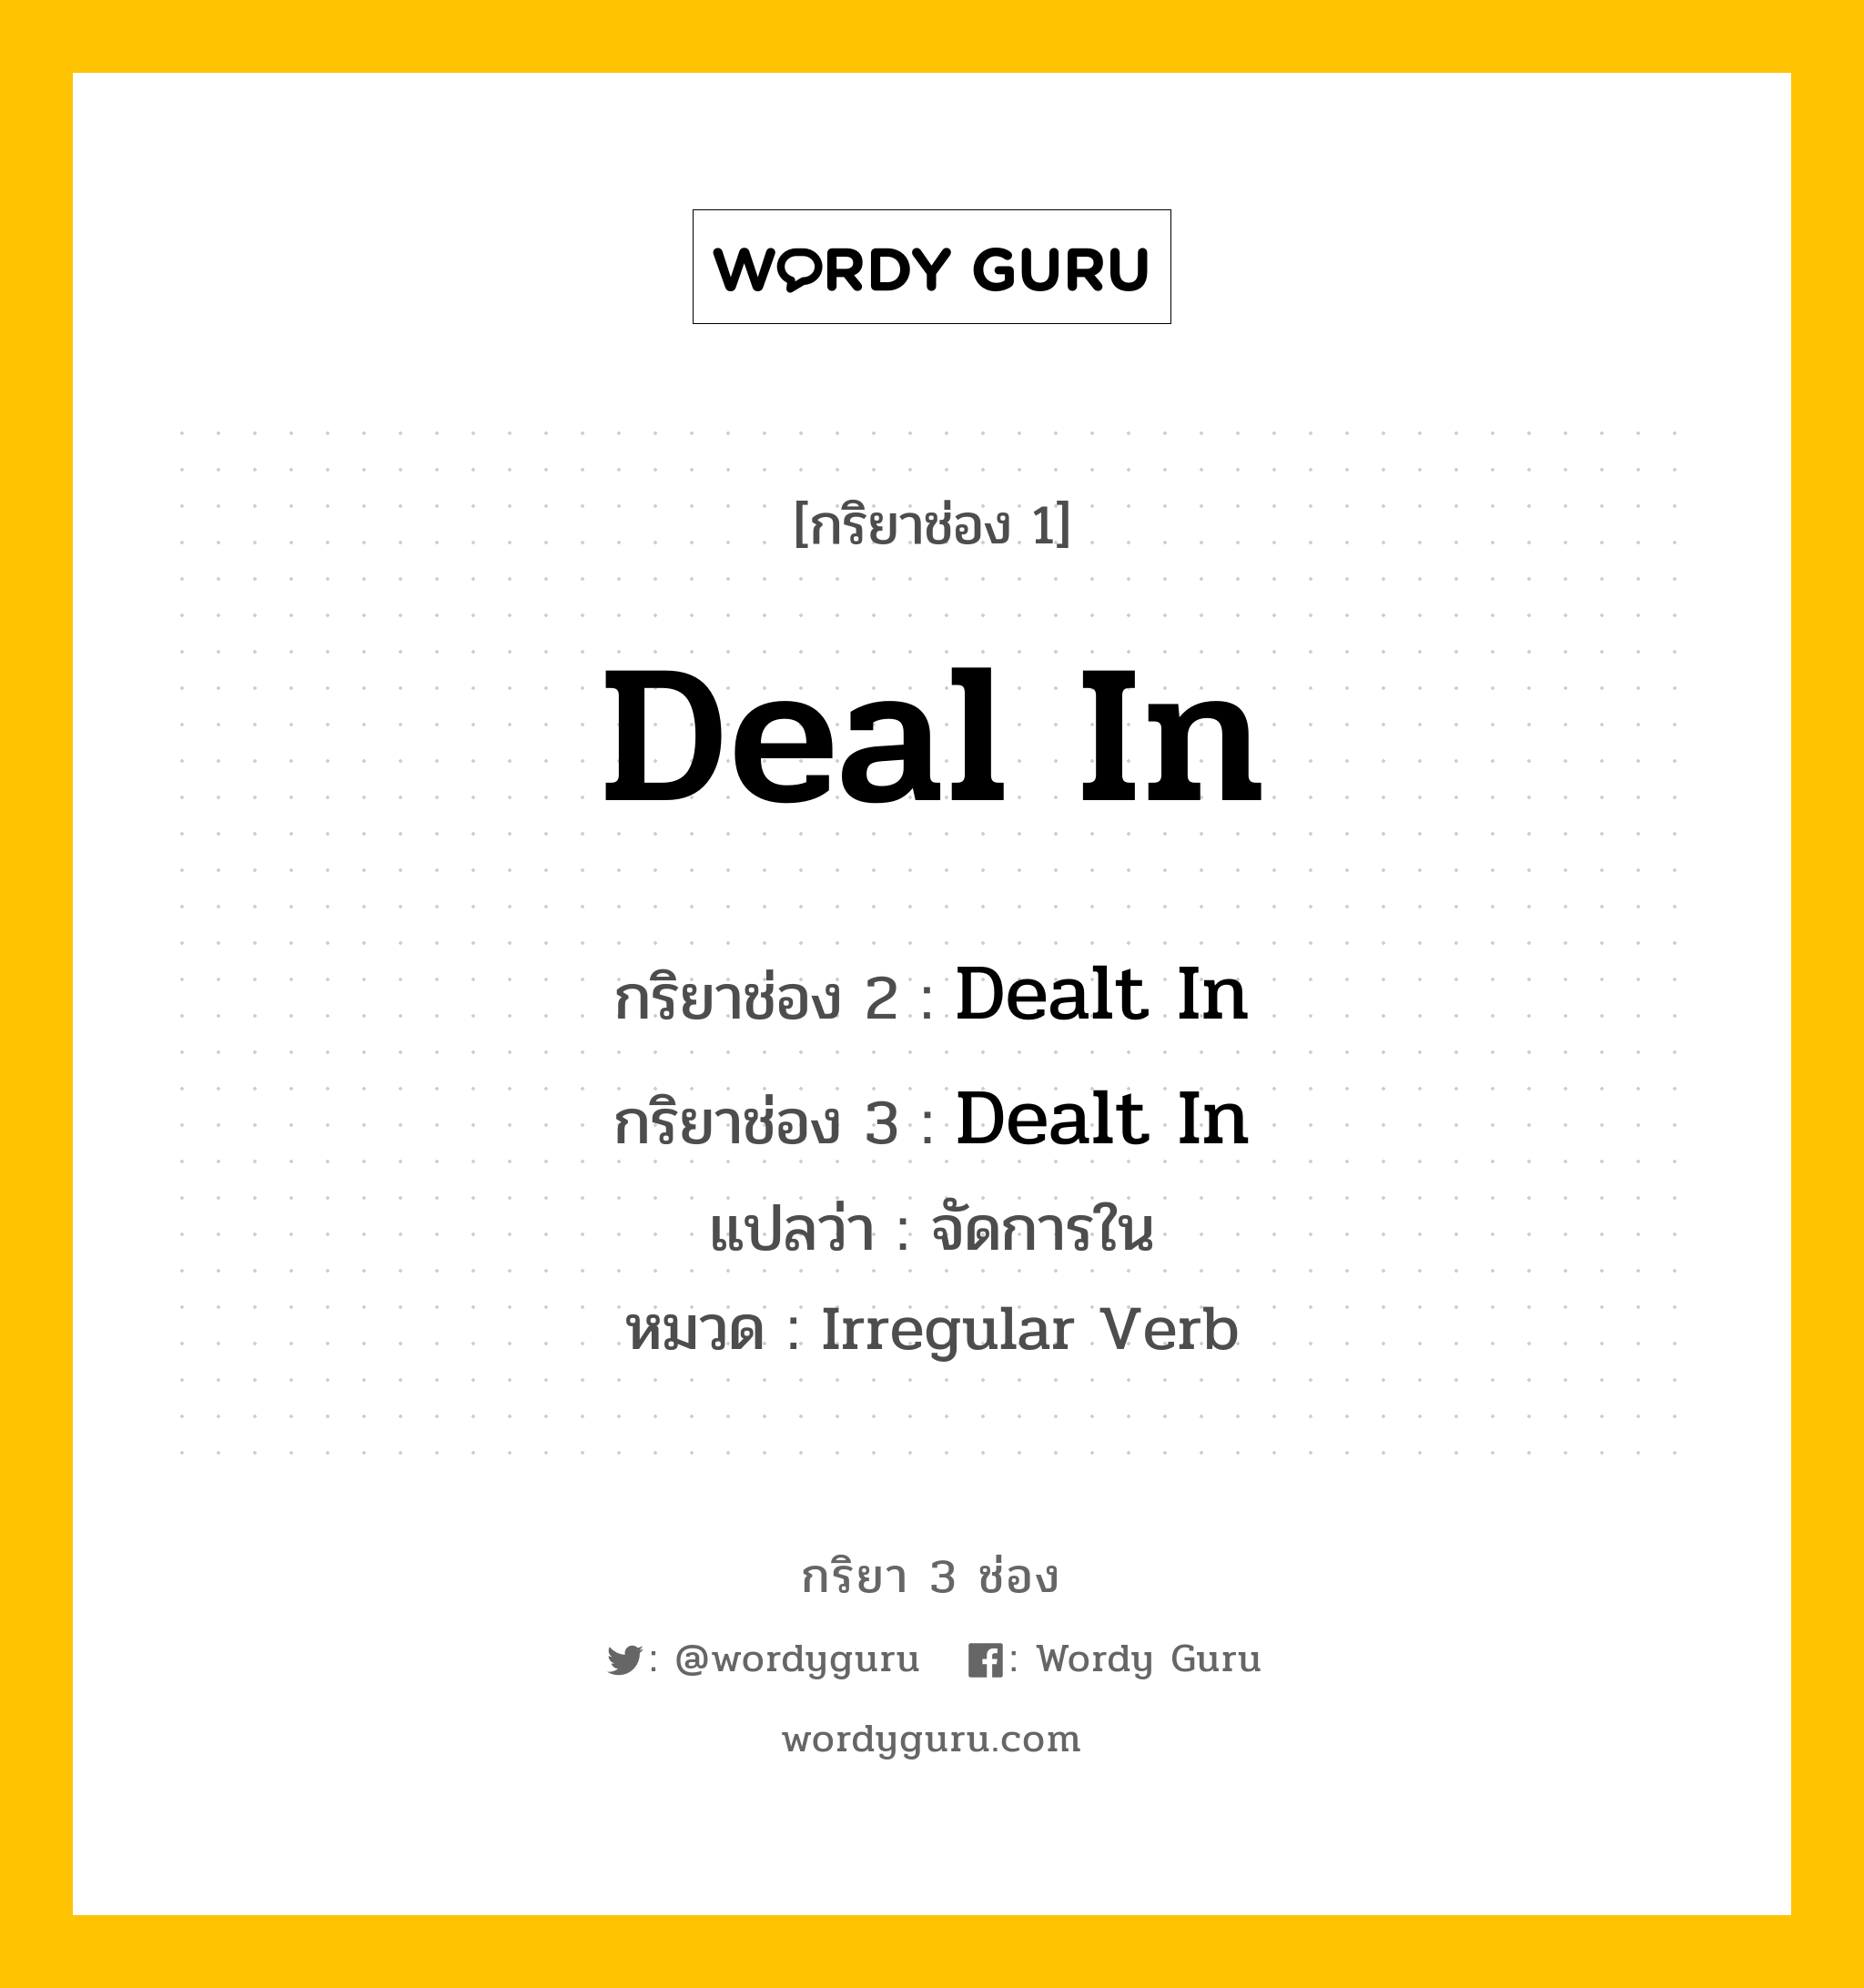 Deal In มีกริยา 3 ช่องอะไรบ้าง? คำศัพท์ในกลุ่มประเภท Irregular Verb, กริยาช่อง 1 Deal In กริยาช่อง 2 Dealt In กริยาช่อง 3 Dealt In แปลว่า จัดการใน หมวด Irregular Verb หมวด Irregular Verb